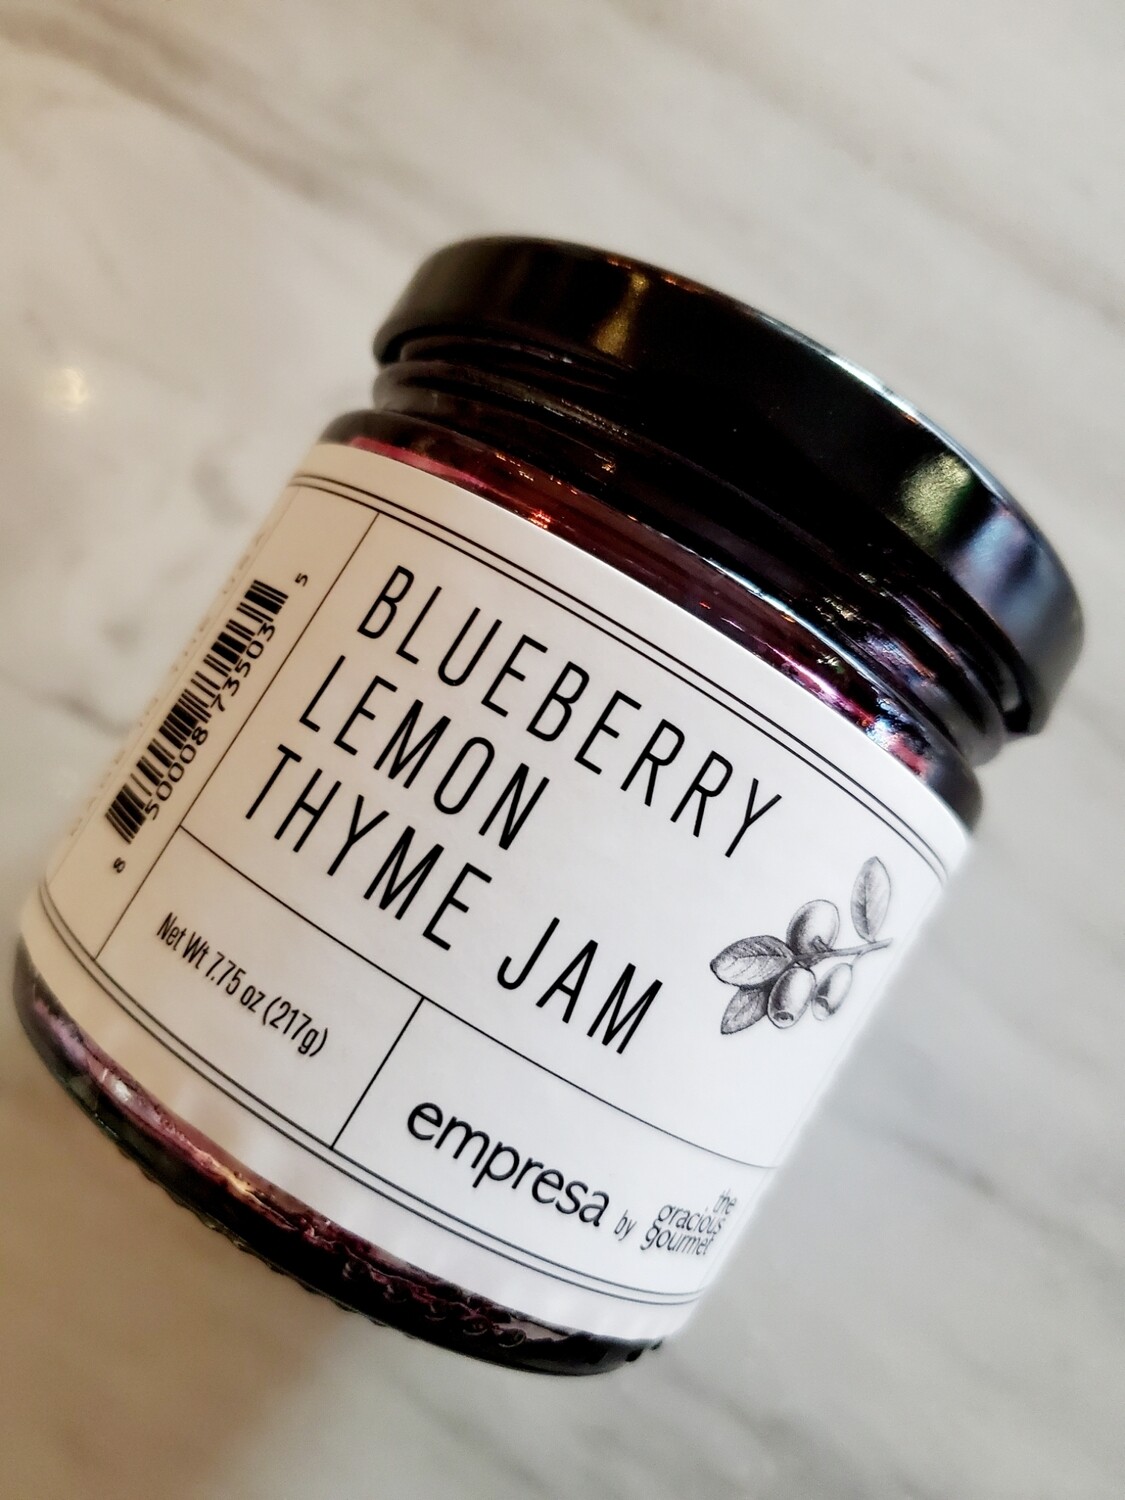 Blueberry Lemon Thyme Jam by The Gracious Gourmet